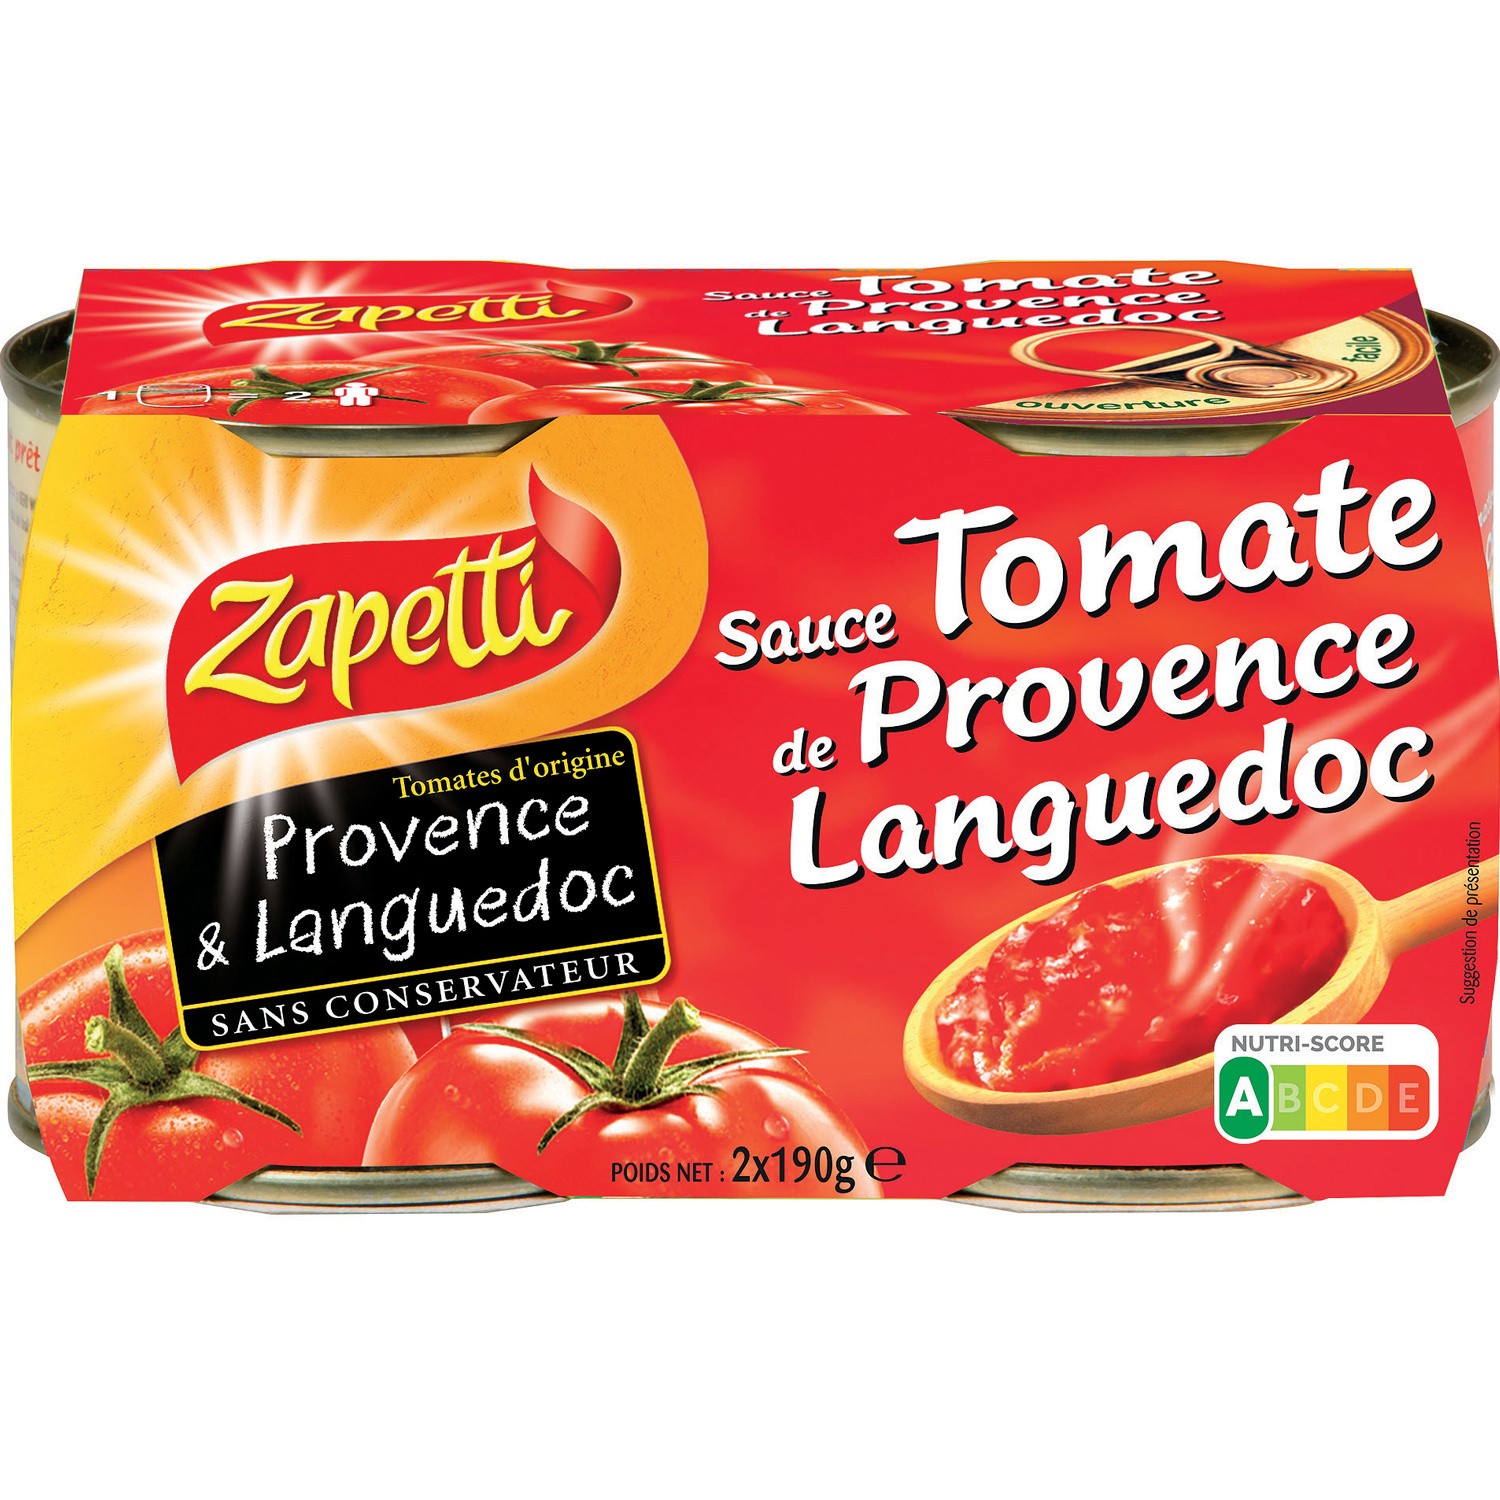 Sauce tomate de Provence Languedoc